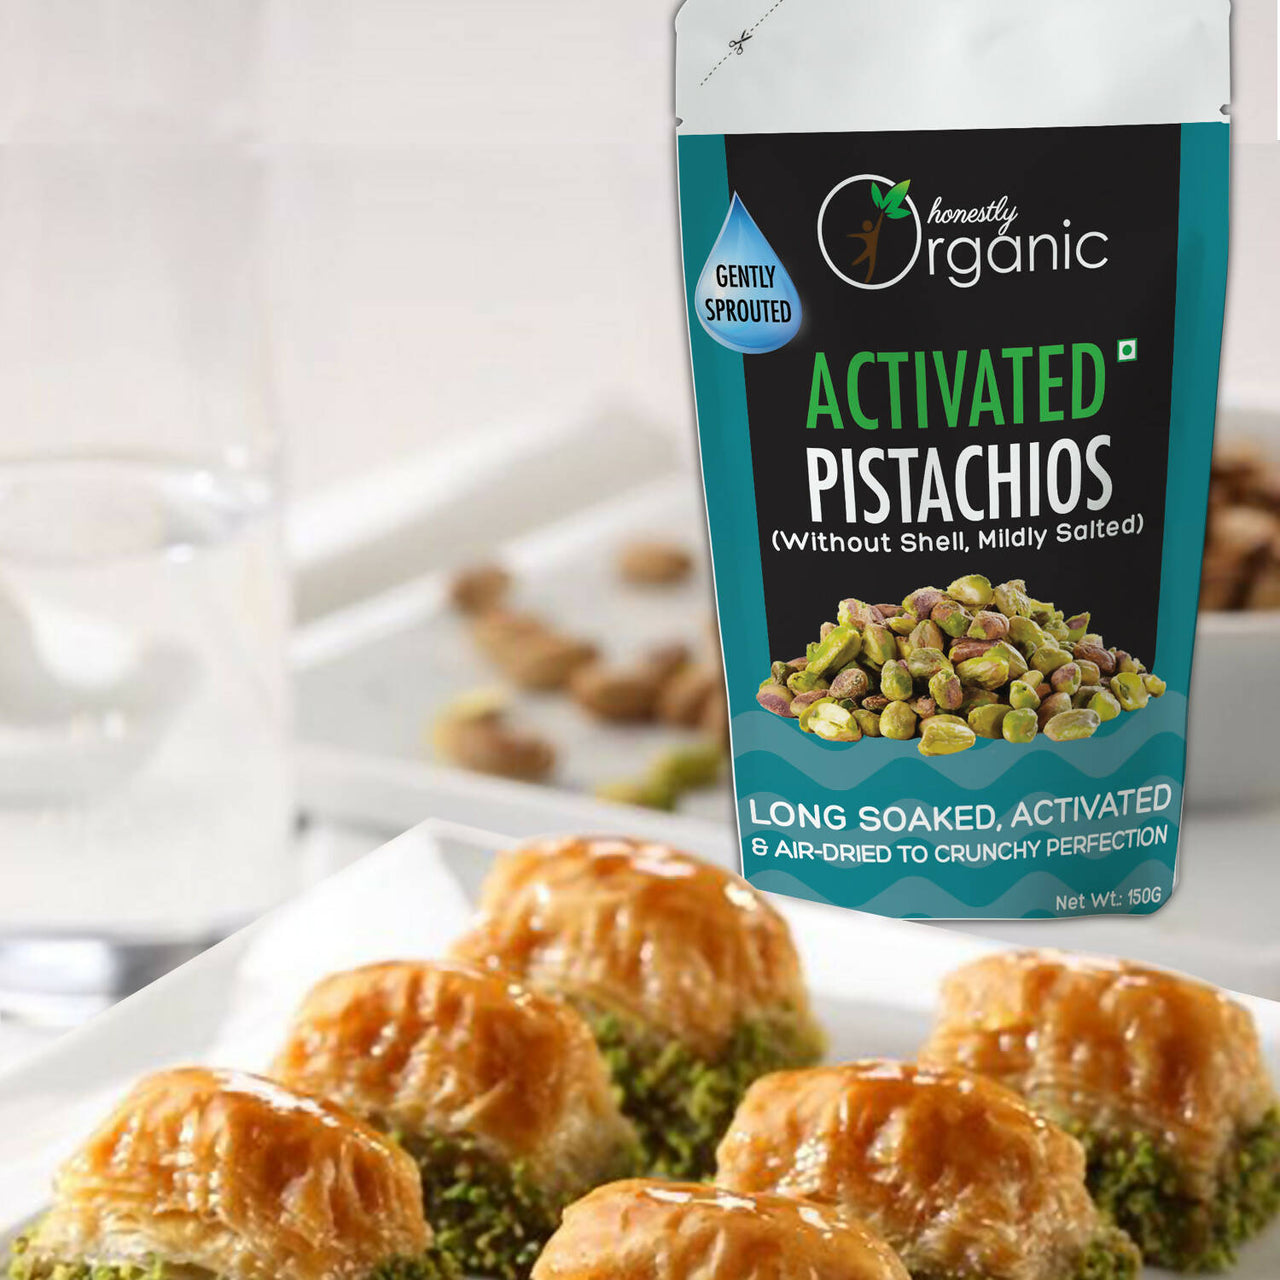 D-Alive Honestly Organic Activated Pistachios - Distacart